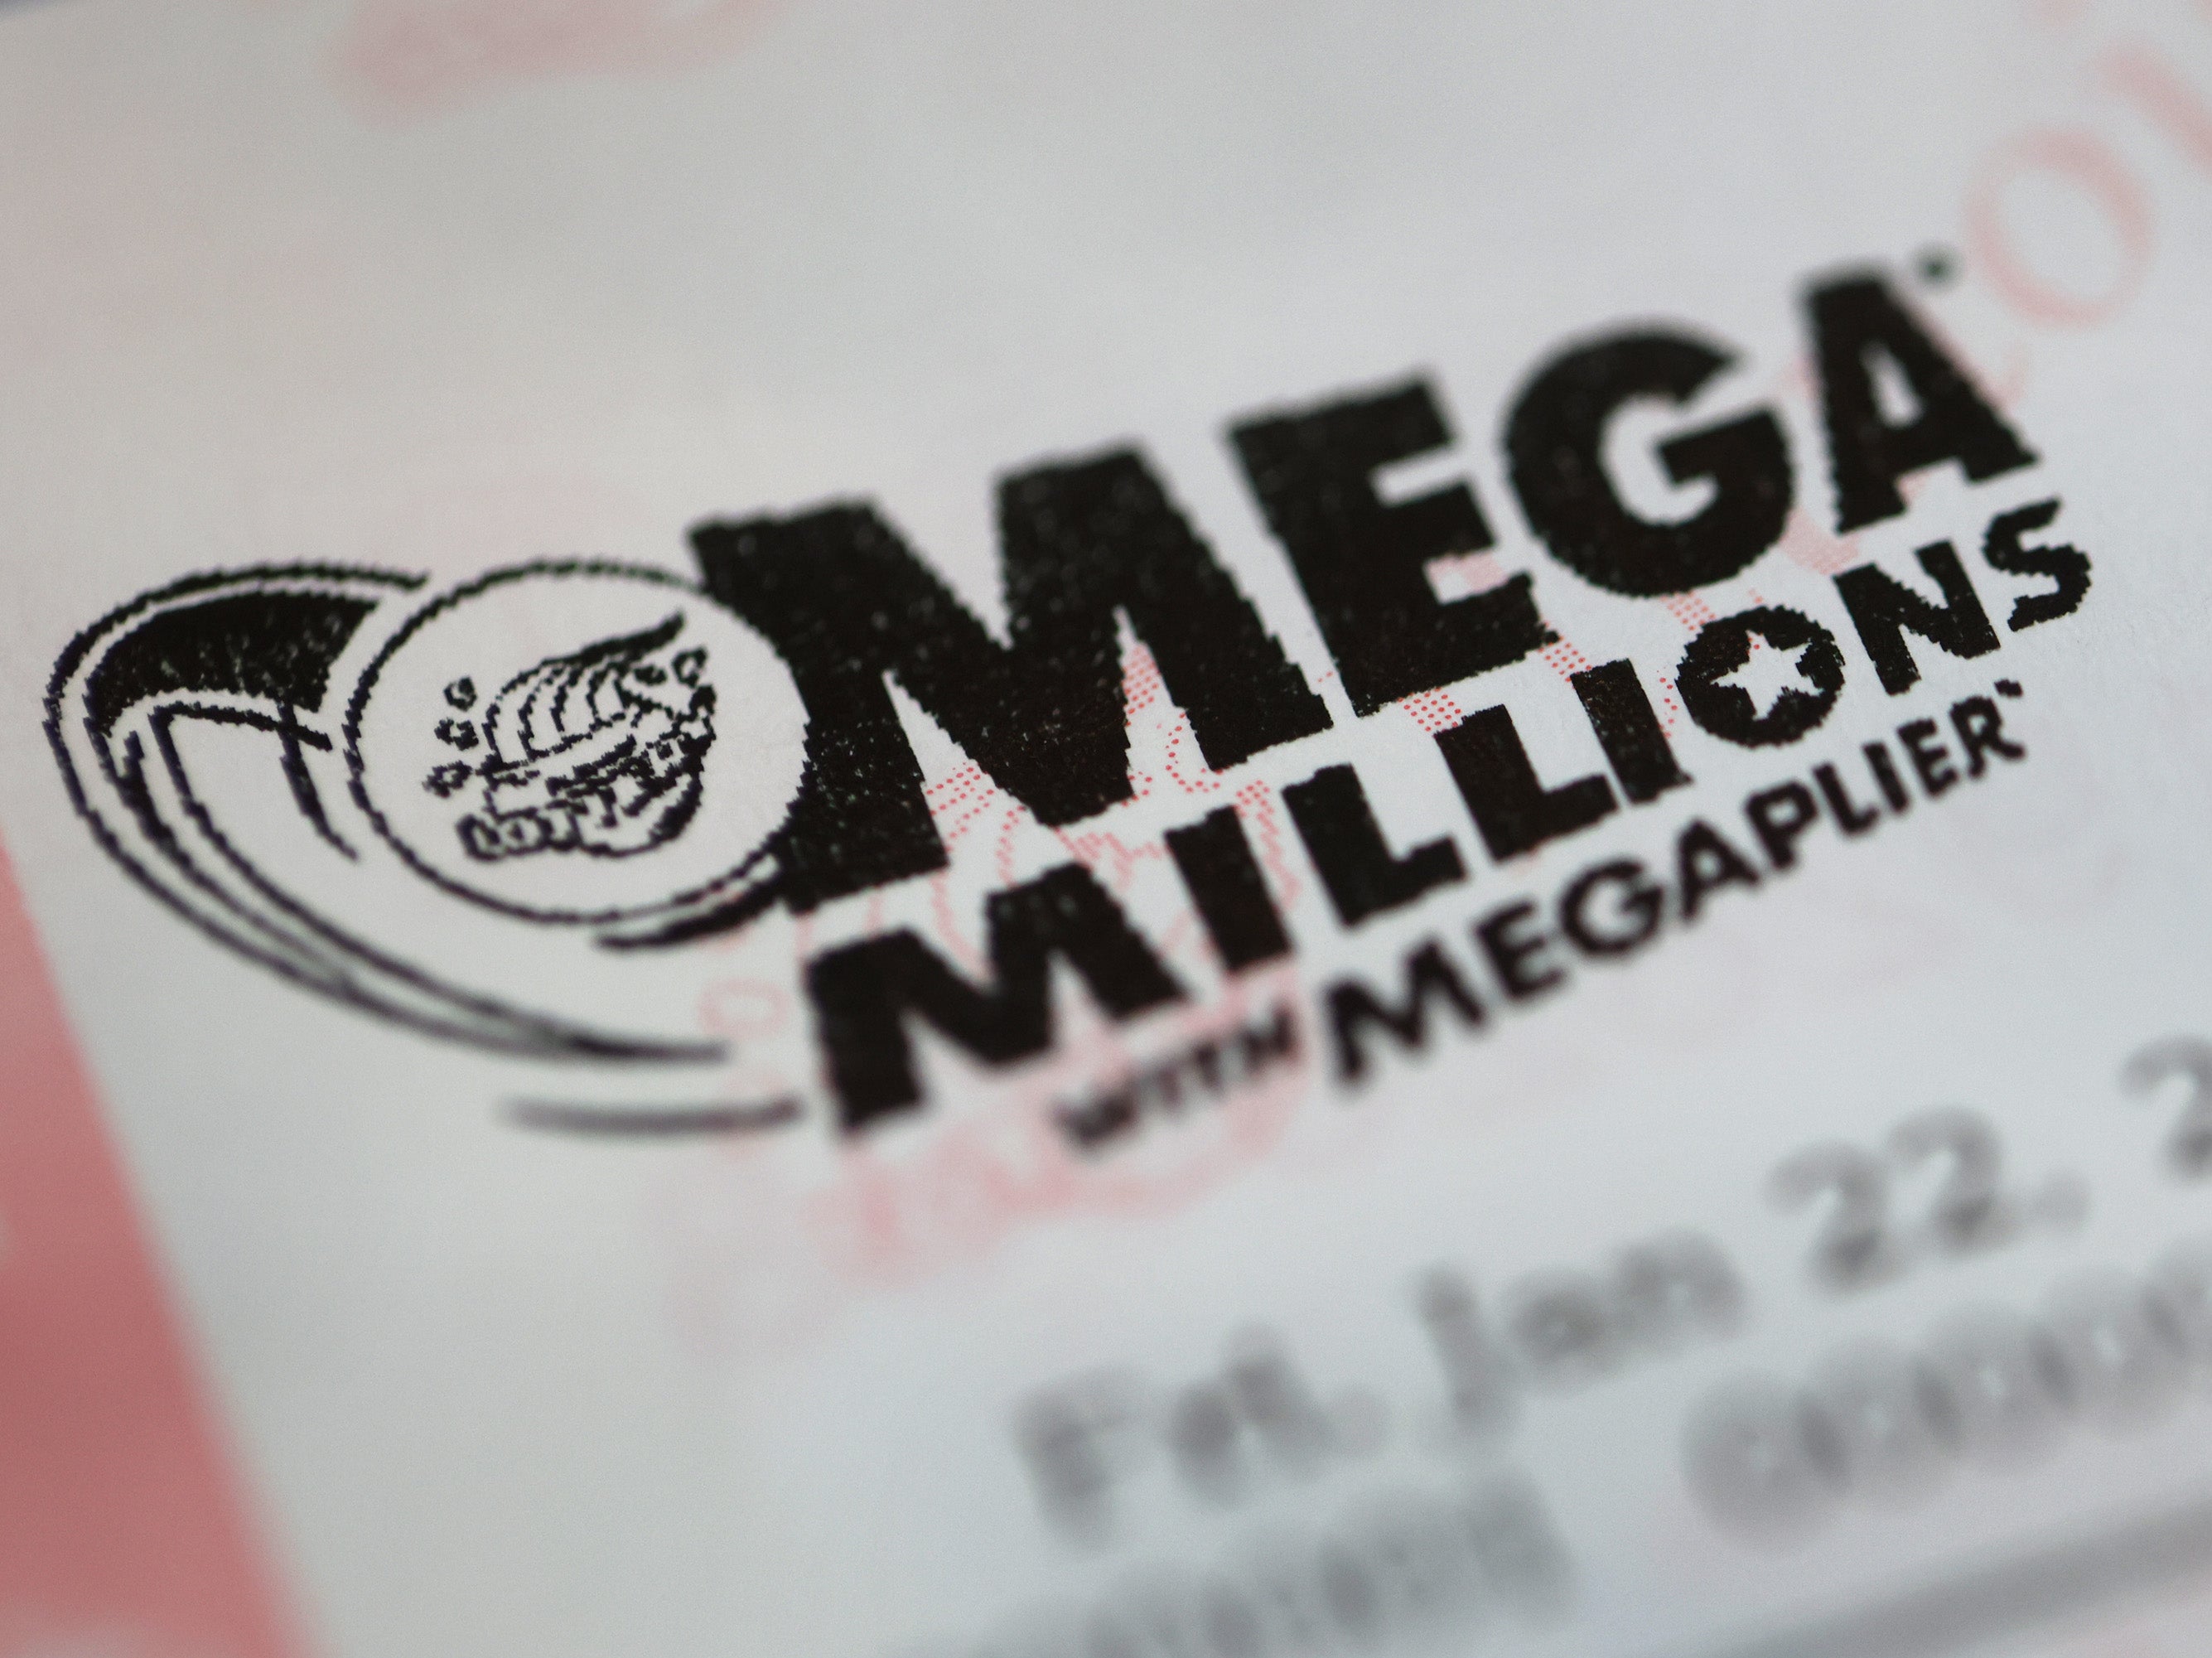 A ticket holder won the $1.05 bn Mega Millions jackpot on Friday